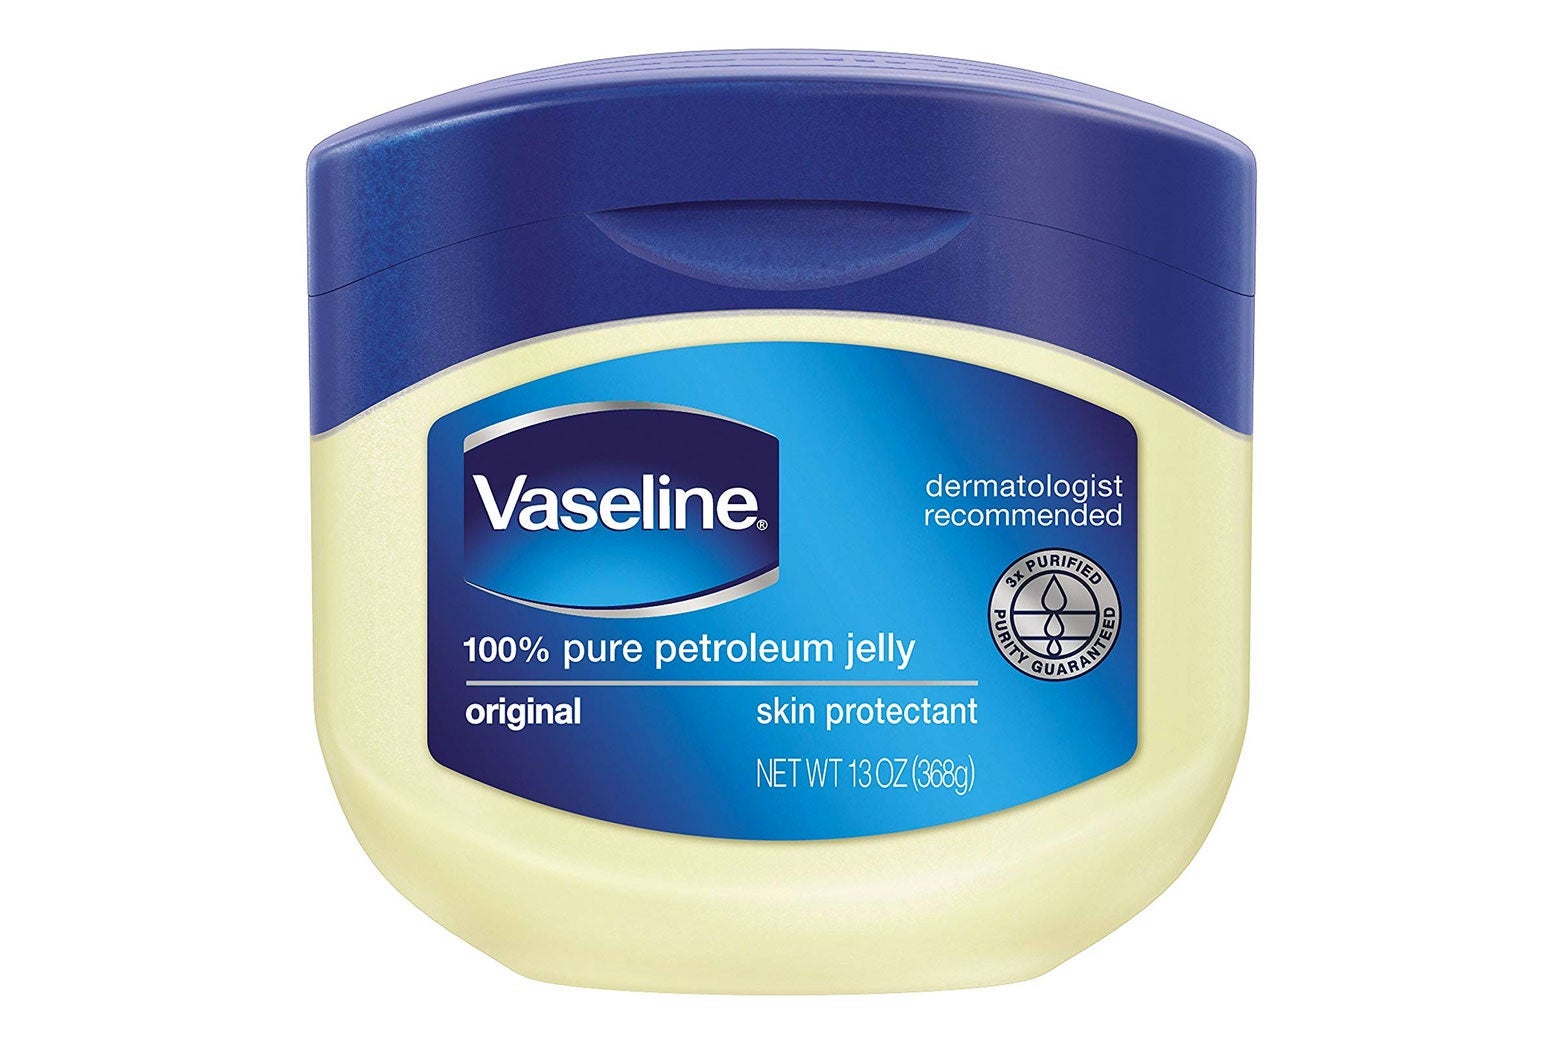 A tub of Vaseline Petroleum Jelly.